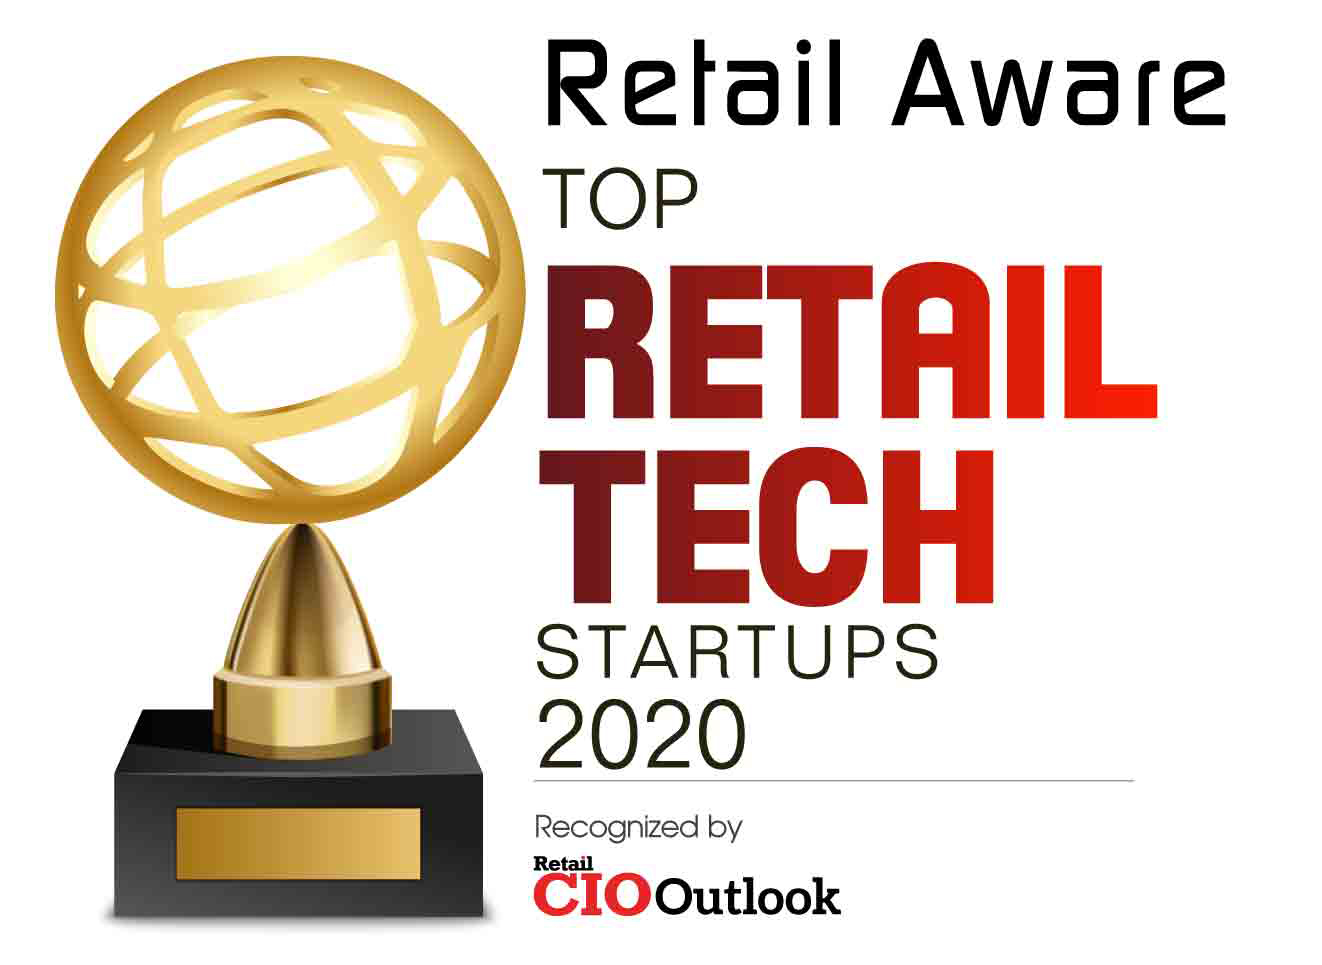 Top 10 Retail Tech Startups - 2020